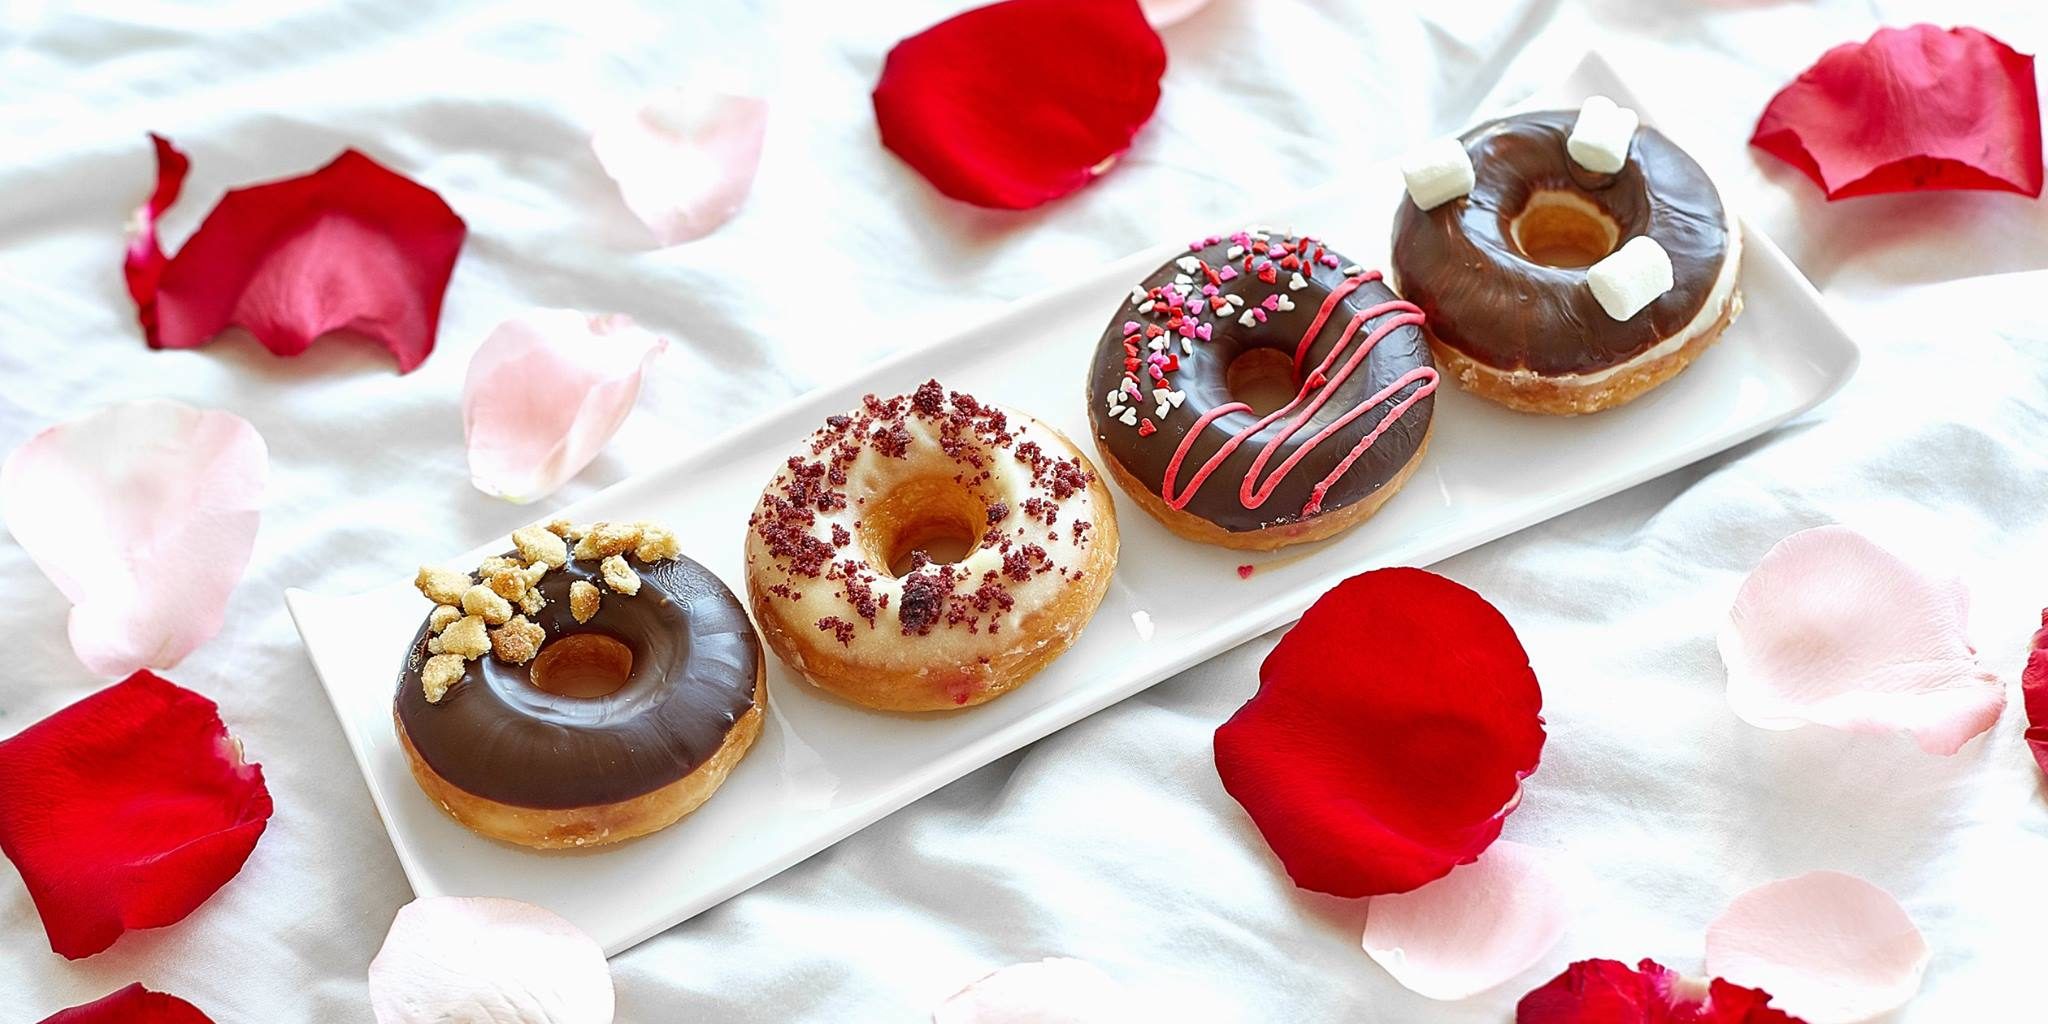 Krispy Kreme Singapore Get $10 Florist Gift Voucher with Purchase Promotion ends 14 Feb 2017